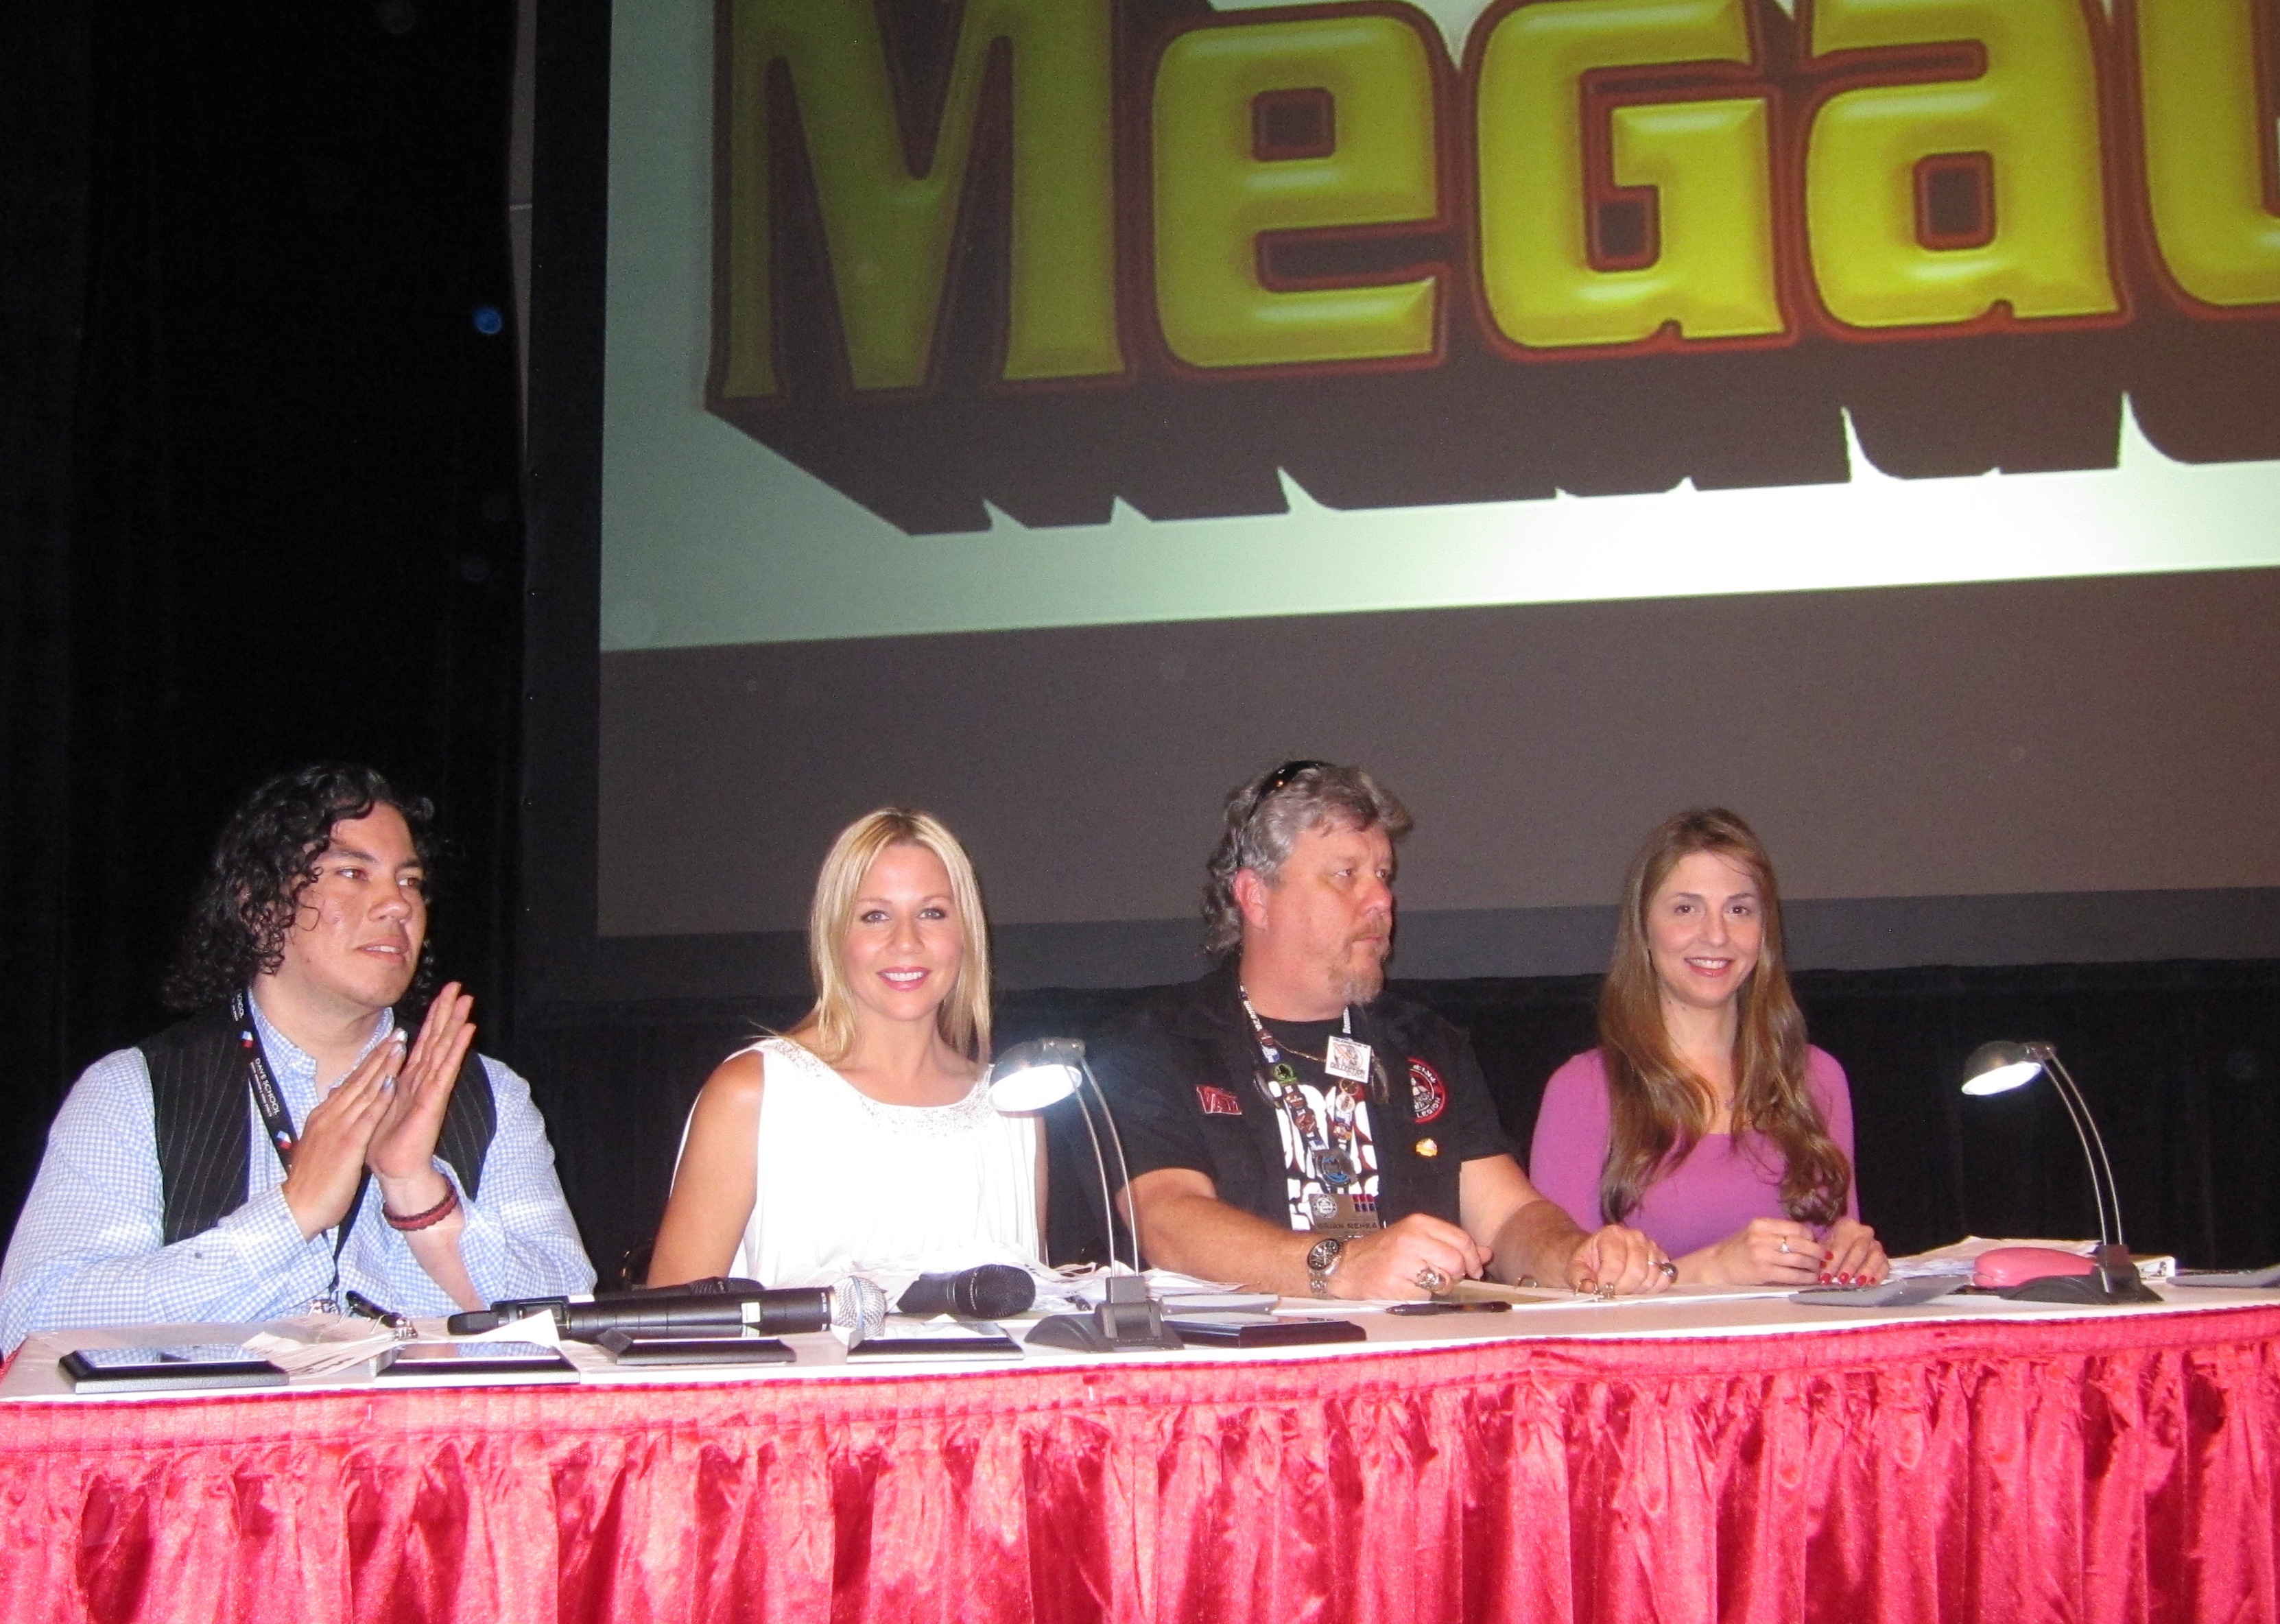 Ellen Dubin and Gigi Edgley judging the costume competition at Megacon 2013, Orlando, Florida